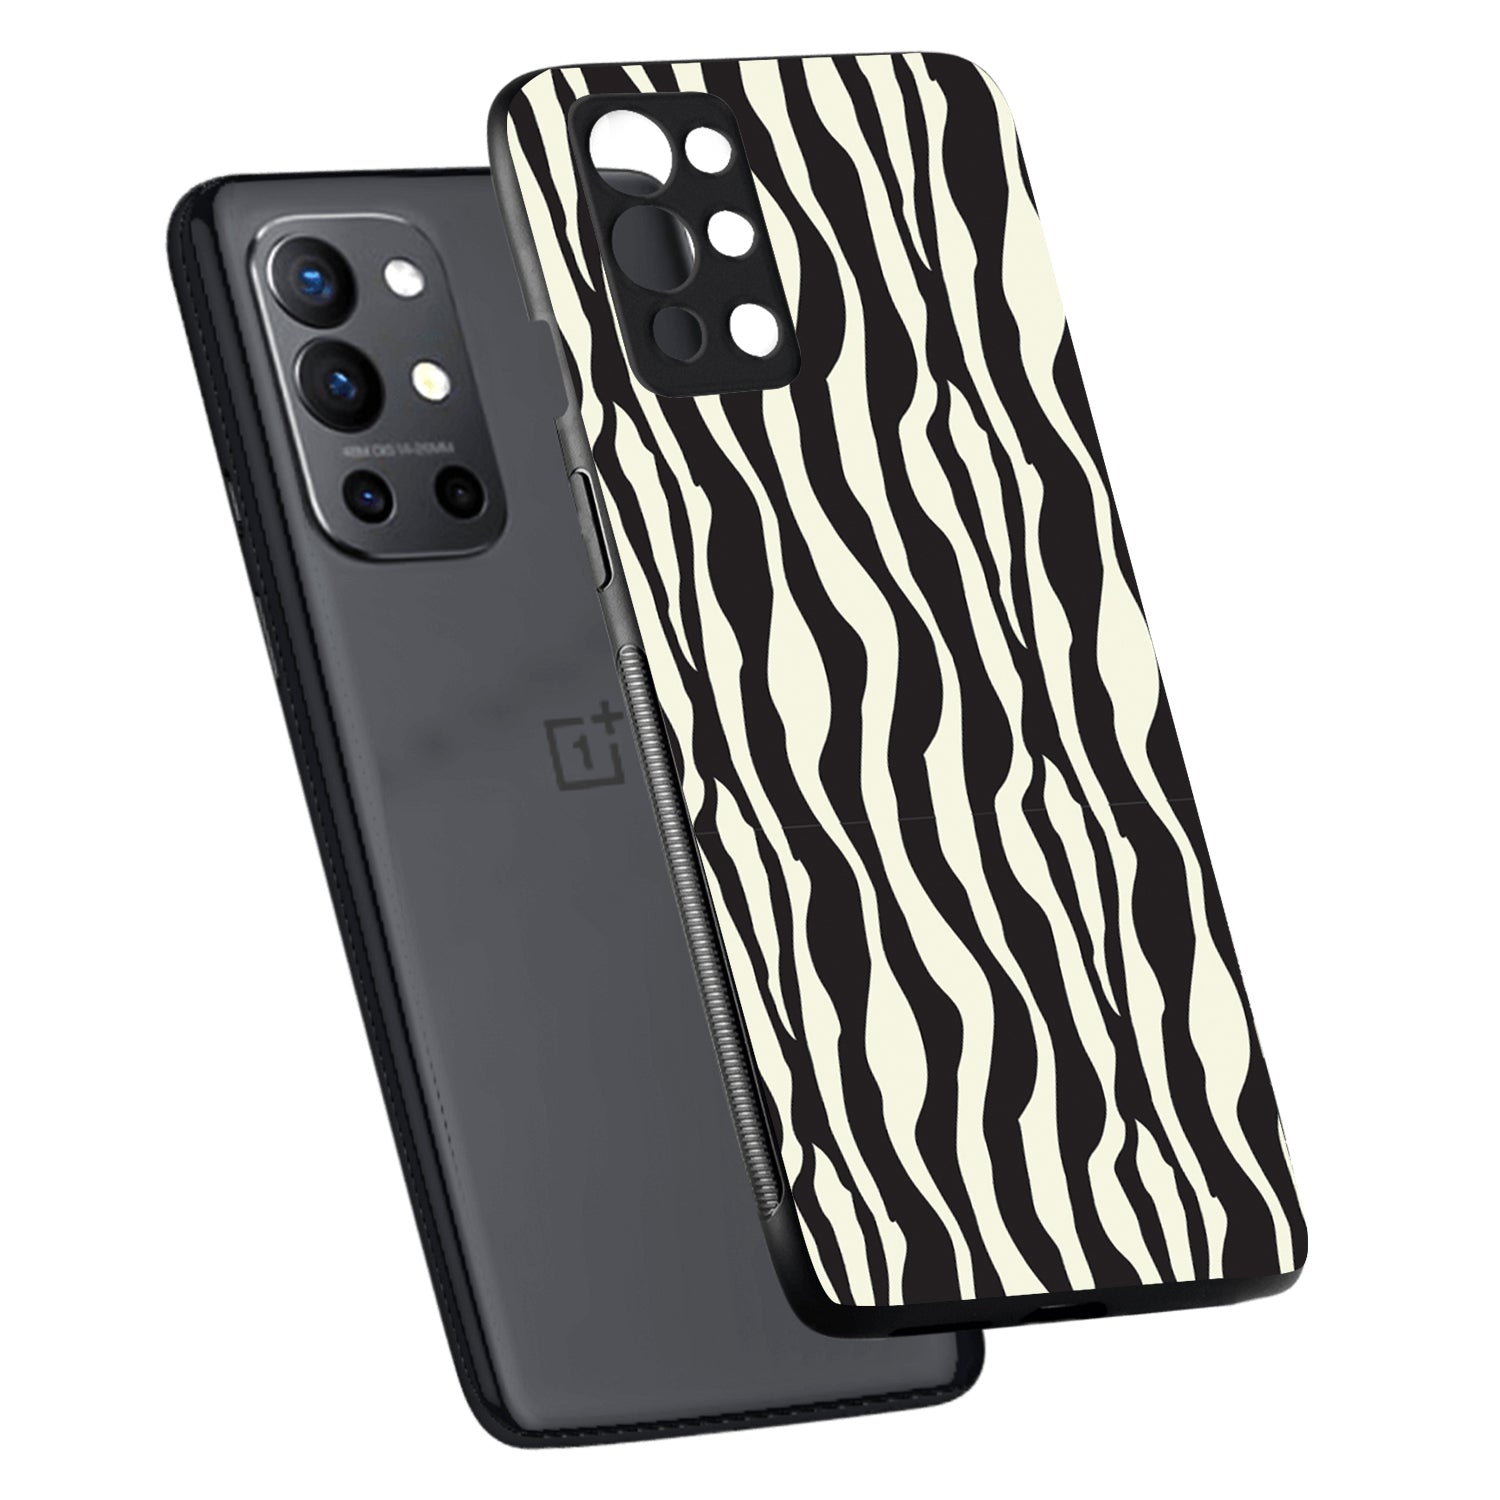 Zebra Animal Print Oneplus 9 R Back Case